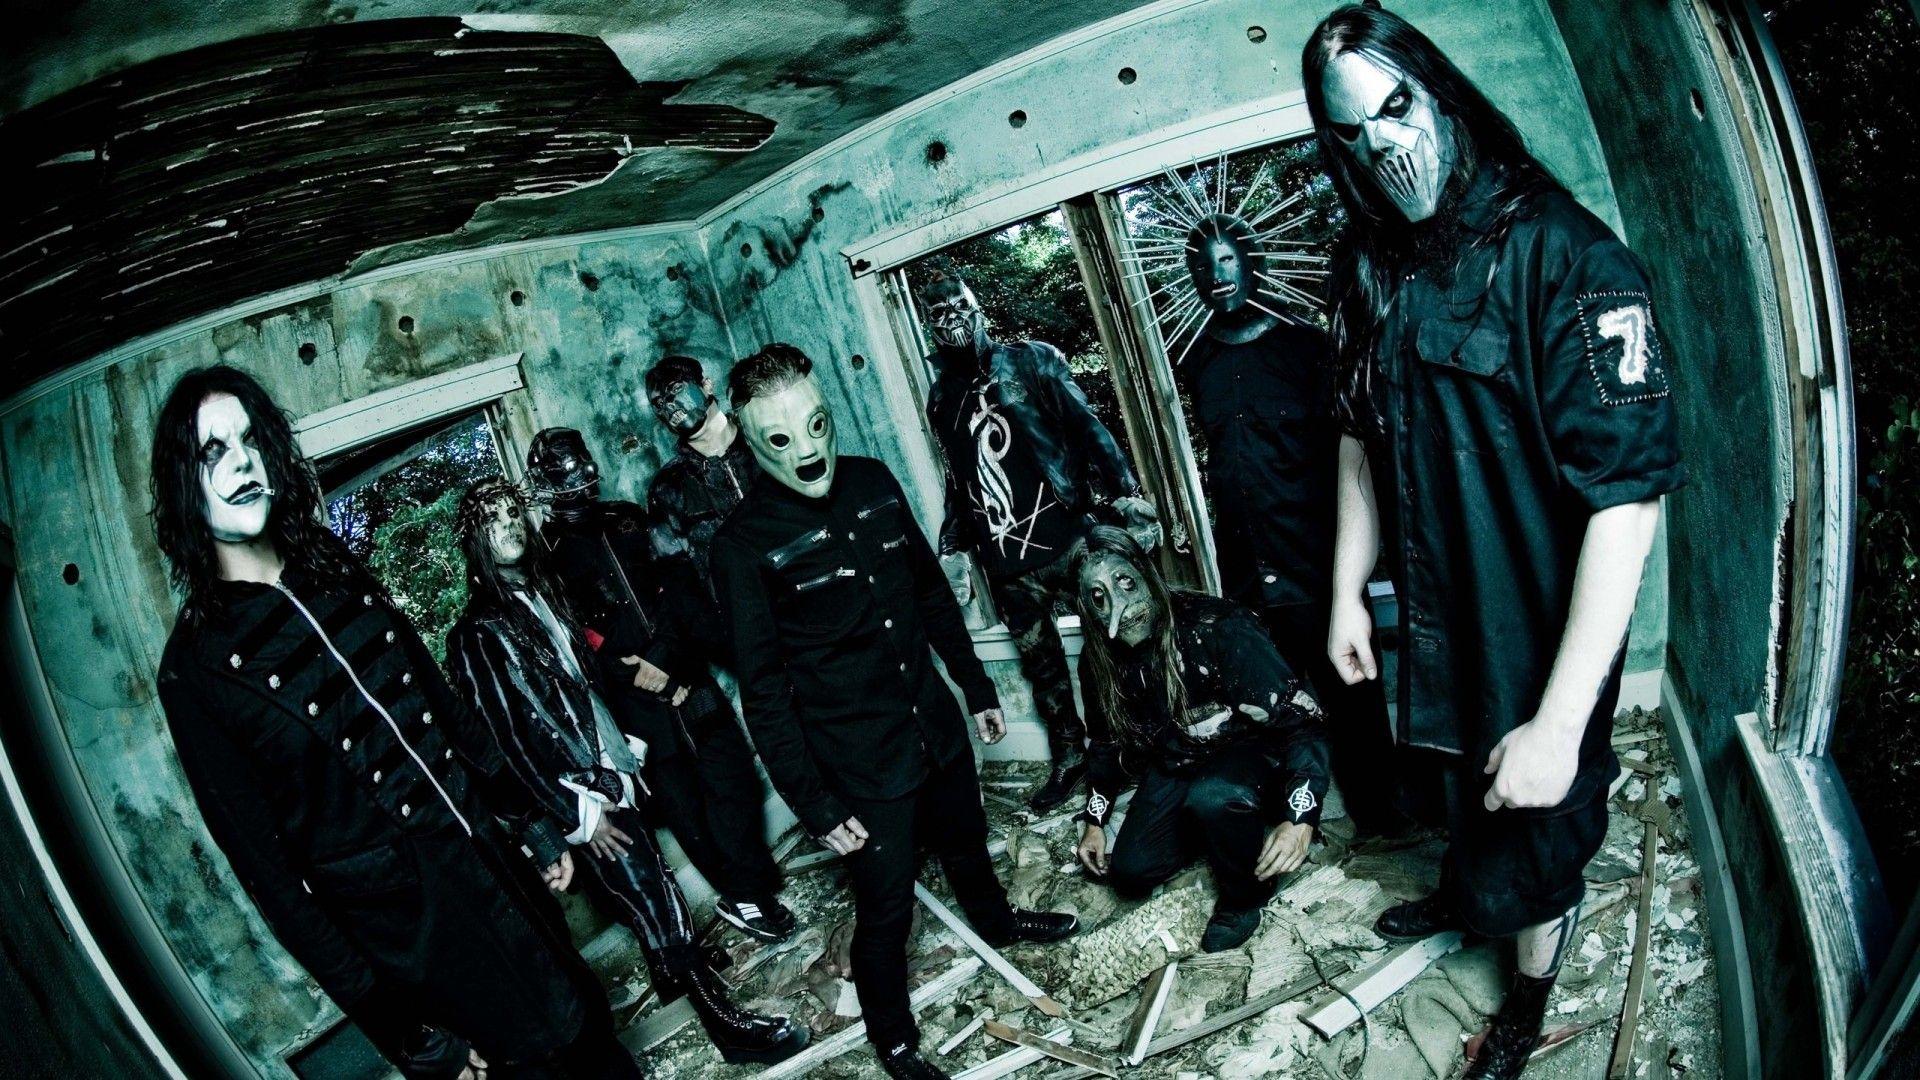 metal music. Home Music picture Slipknot wallpaper. Muusaaac